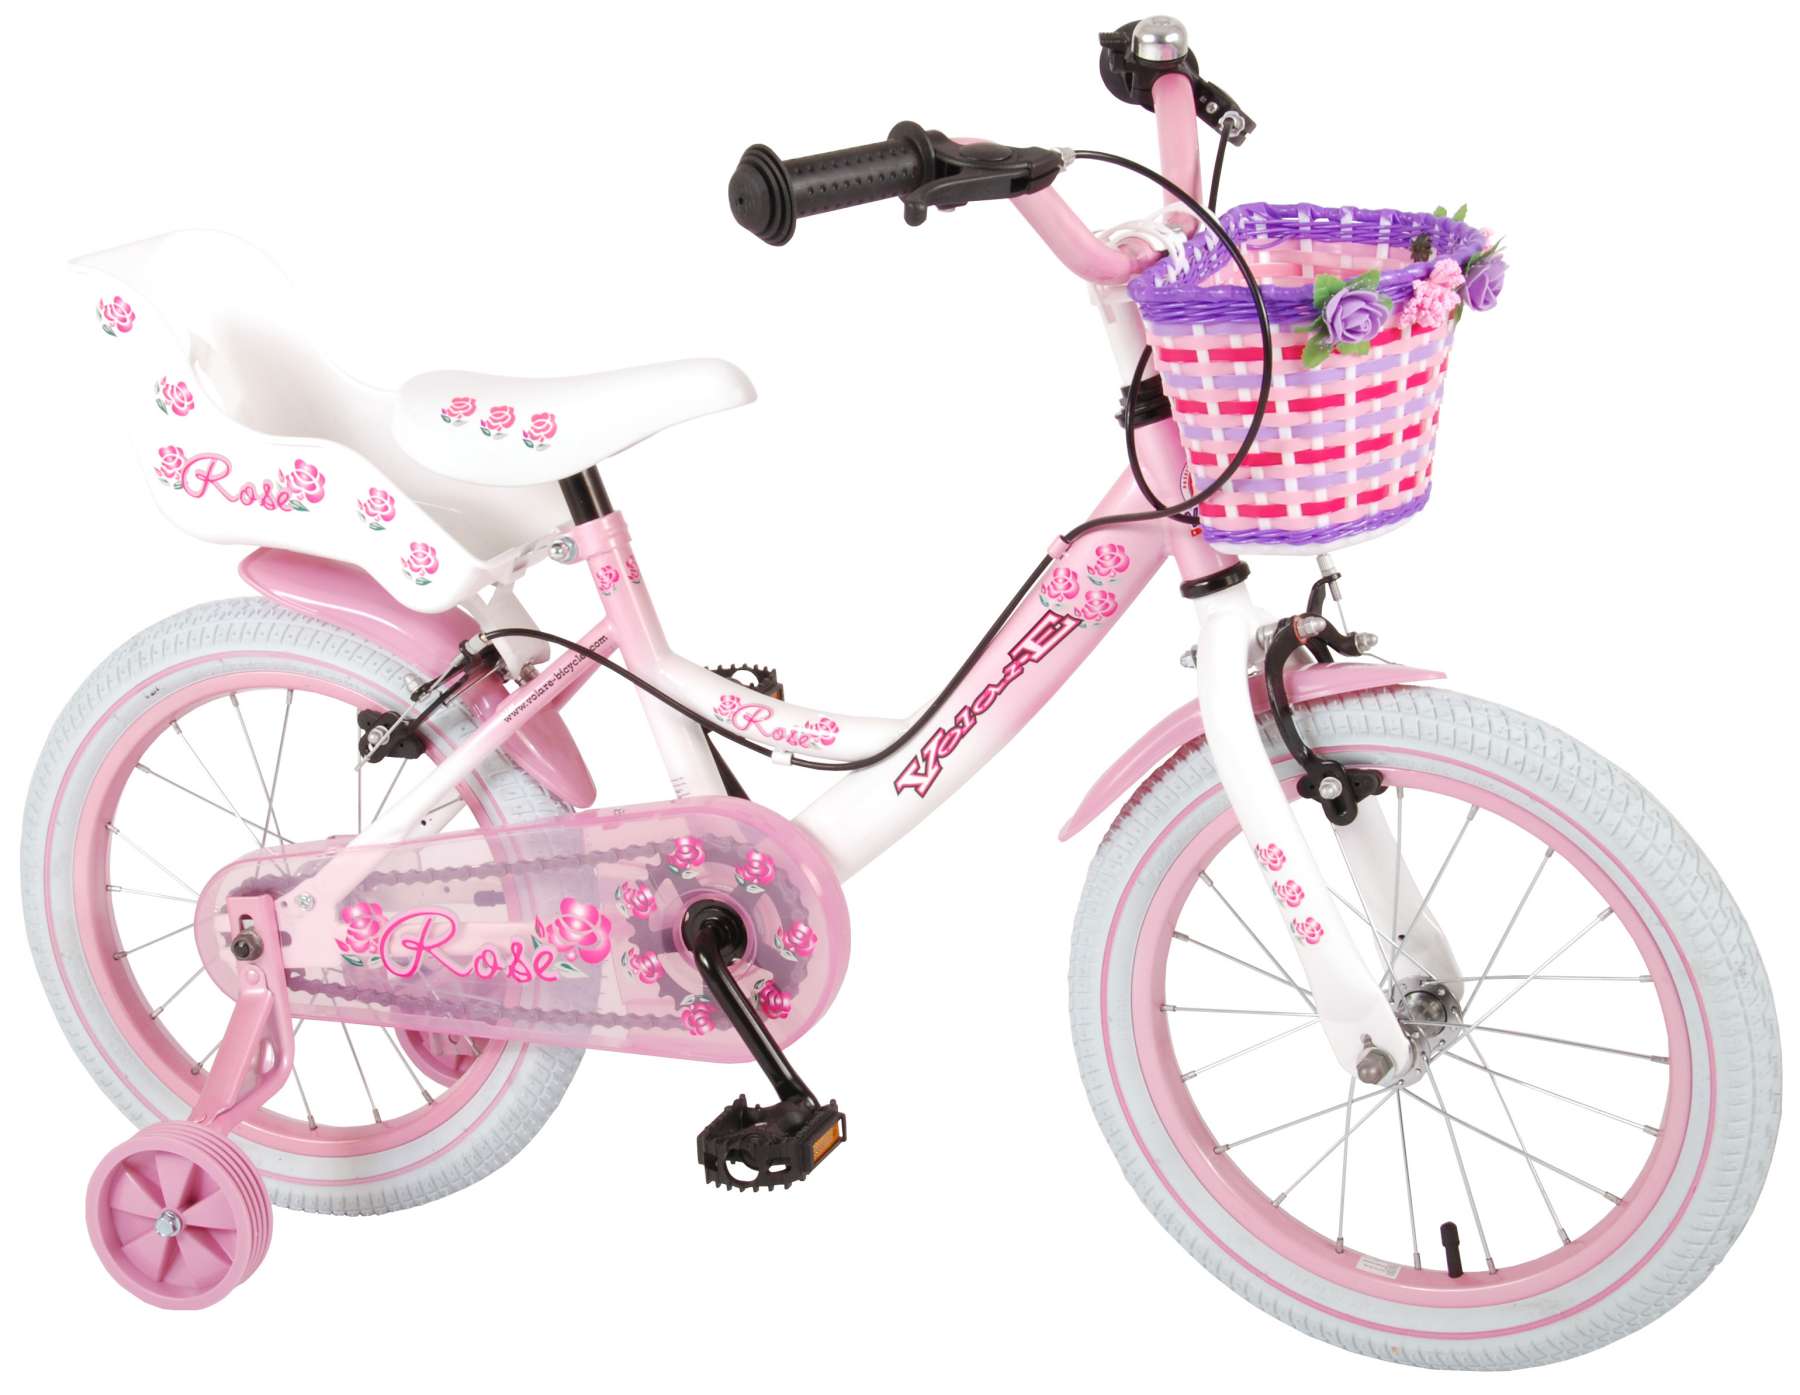 16 inch bike with basket